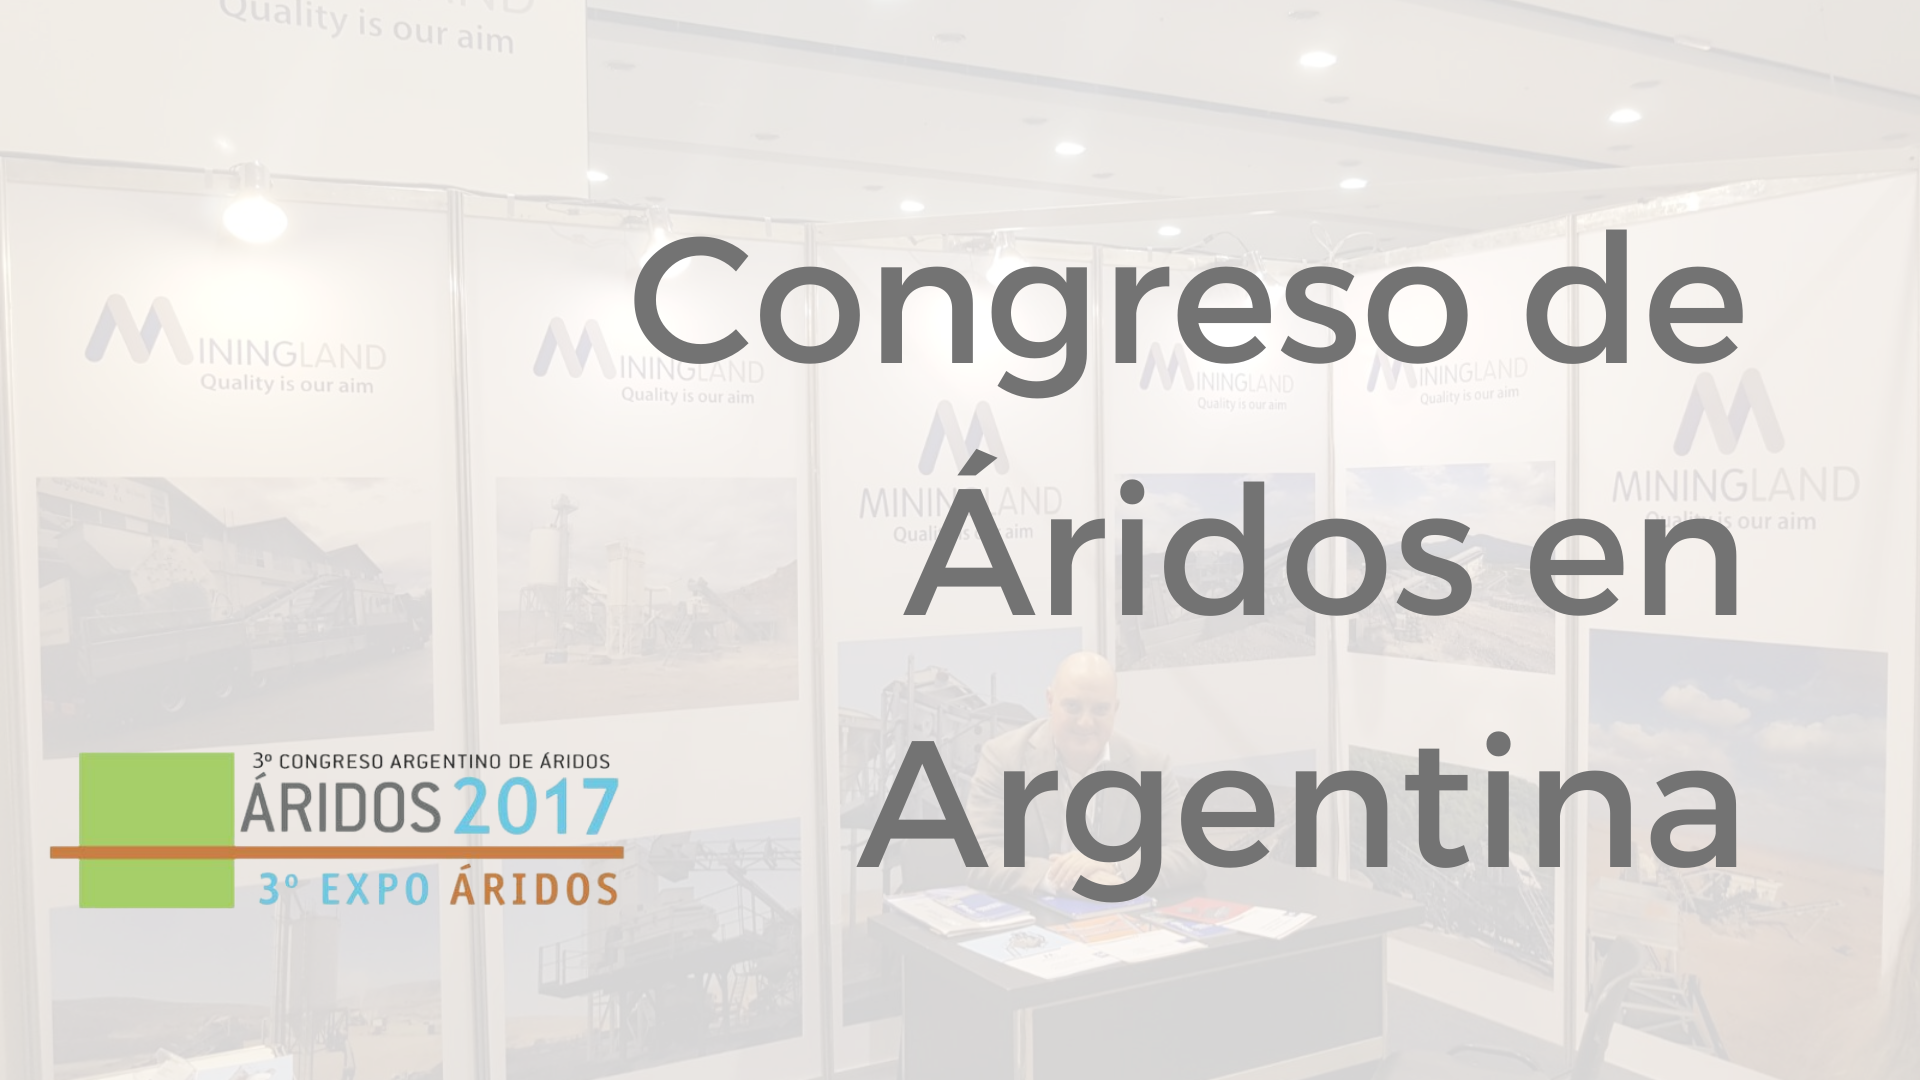 Congreso de áridos en Argentina